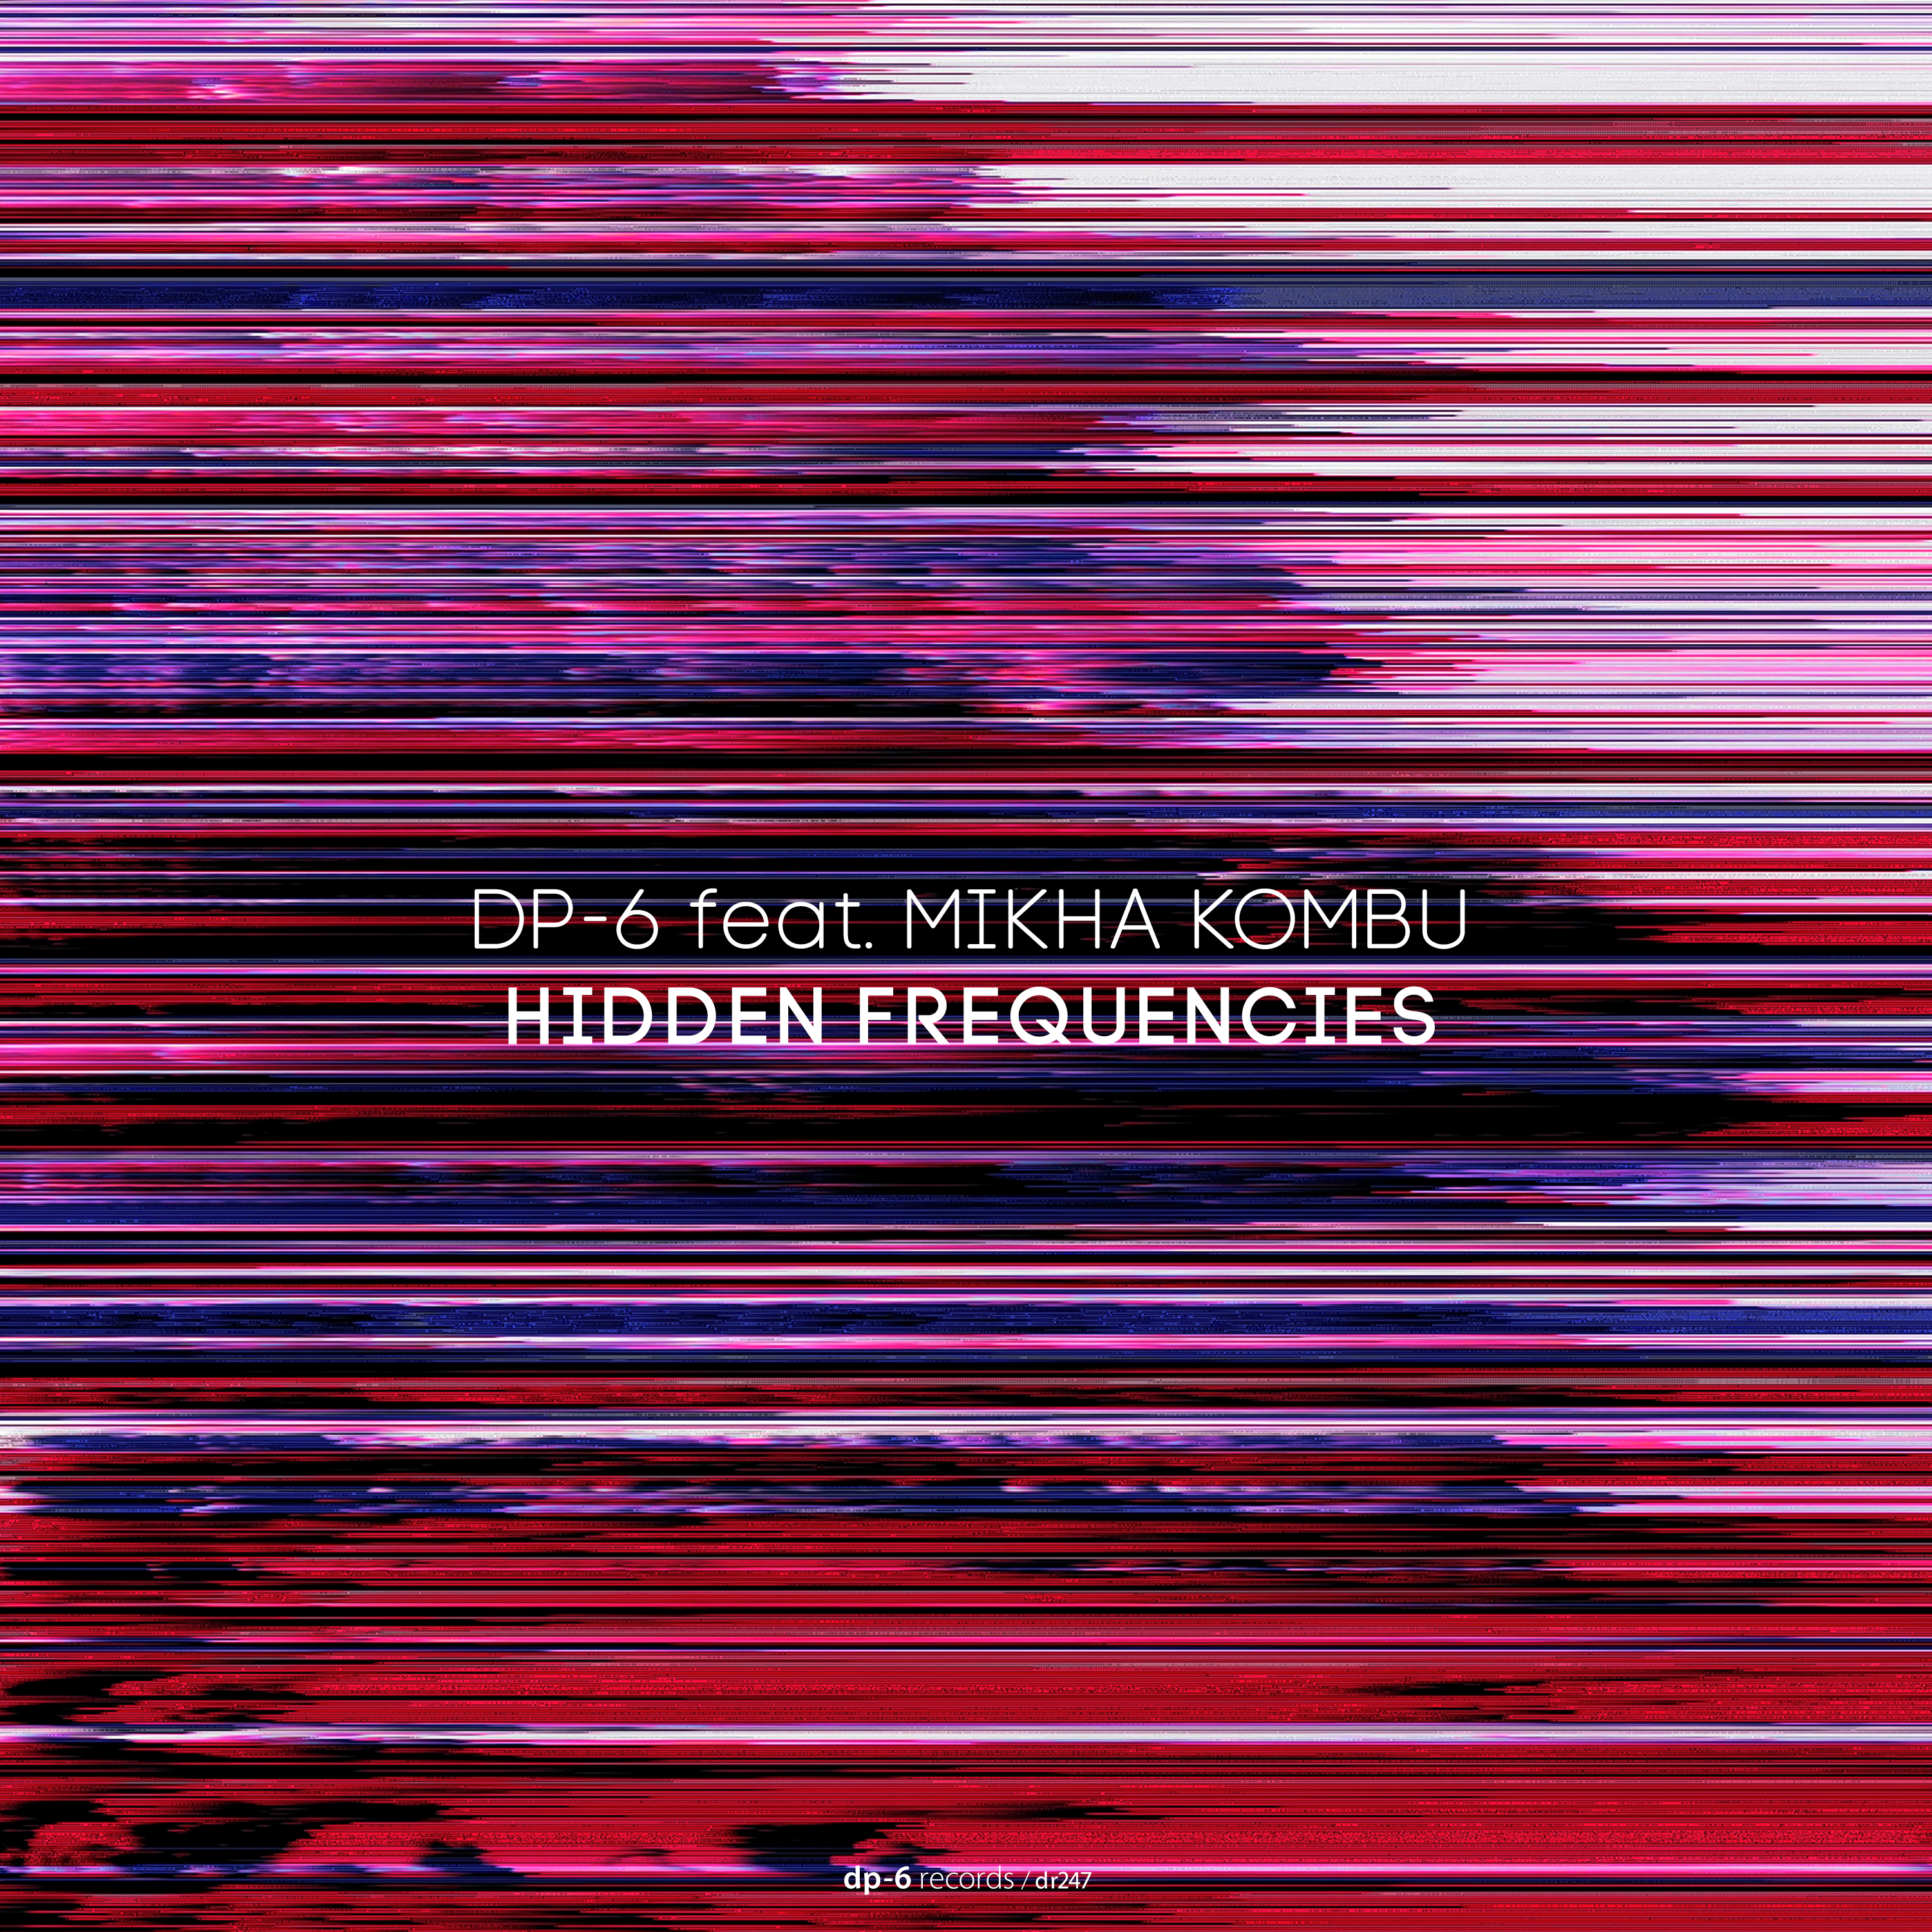 DP-6 feat. Mikha Kombu: Hidden Frequencies